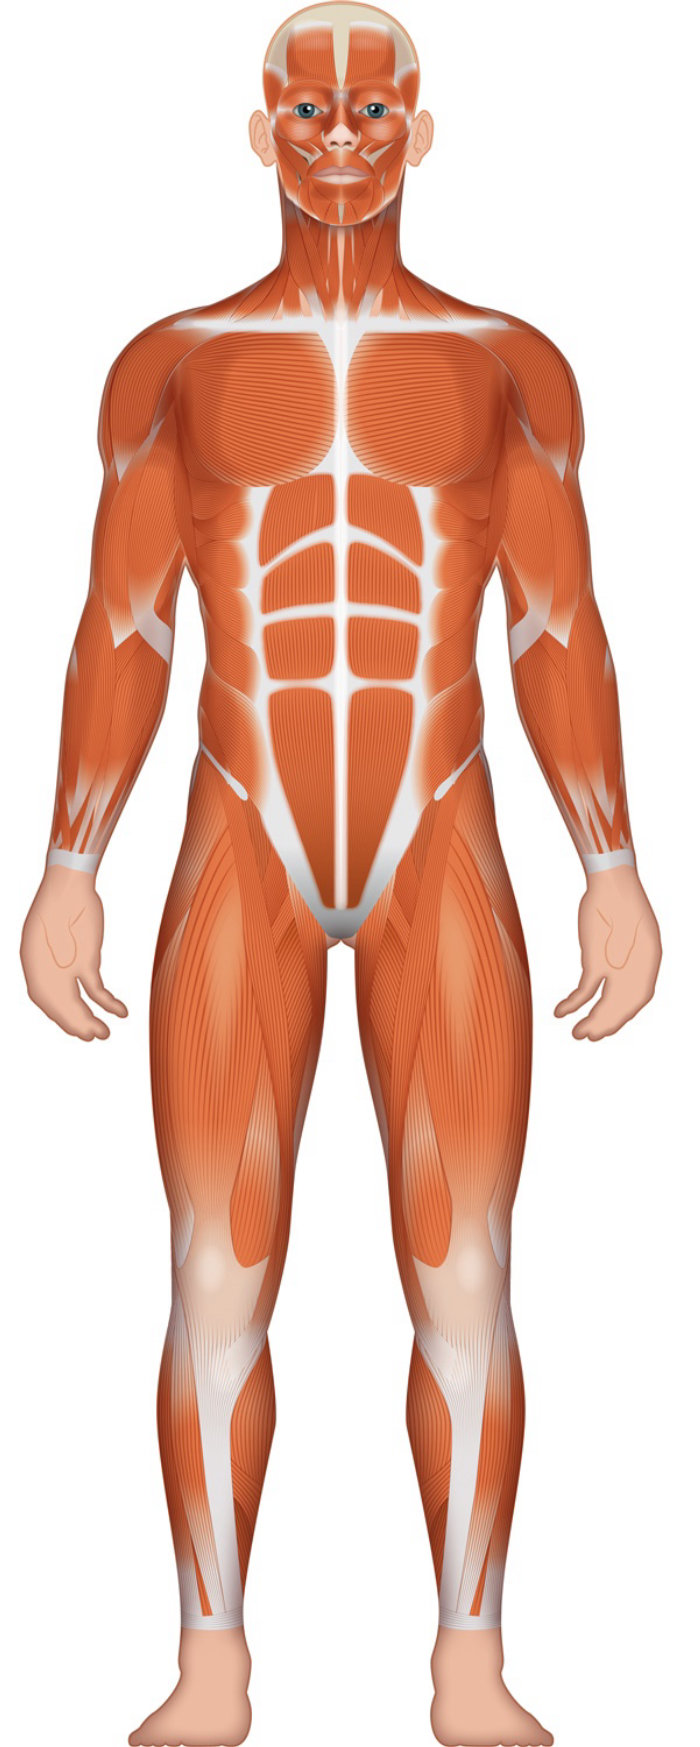 Illustration of Musculature